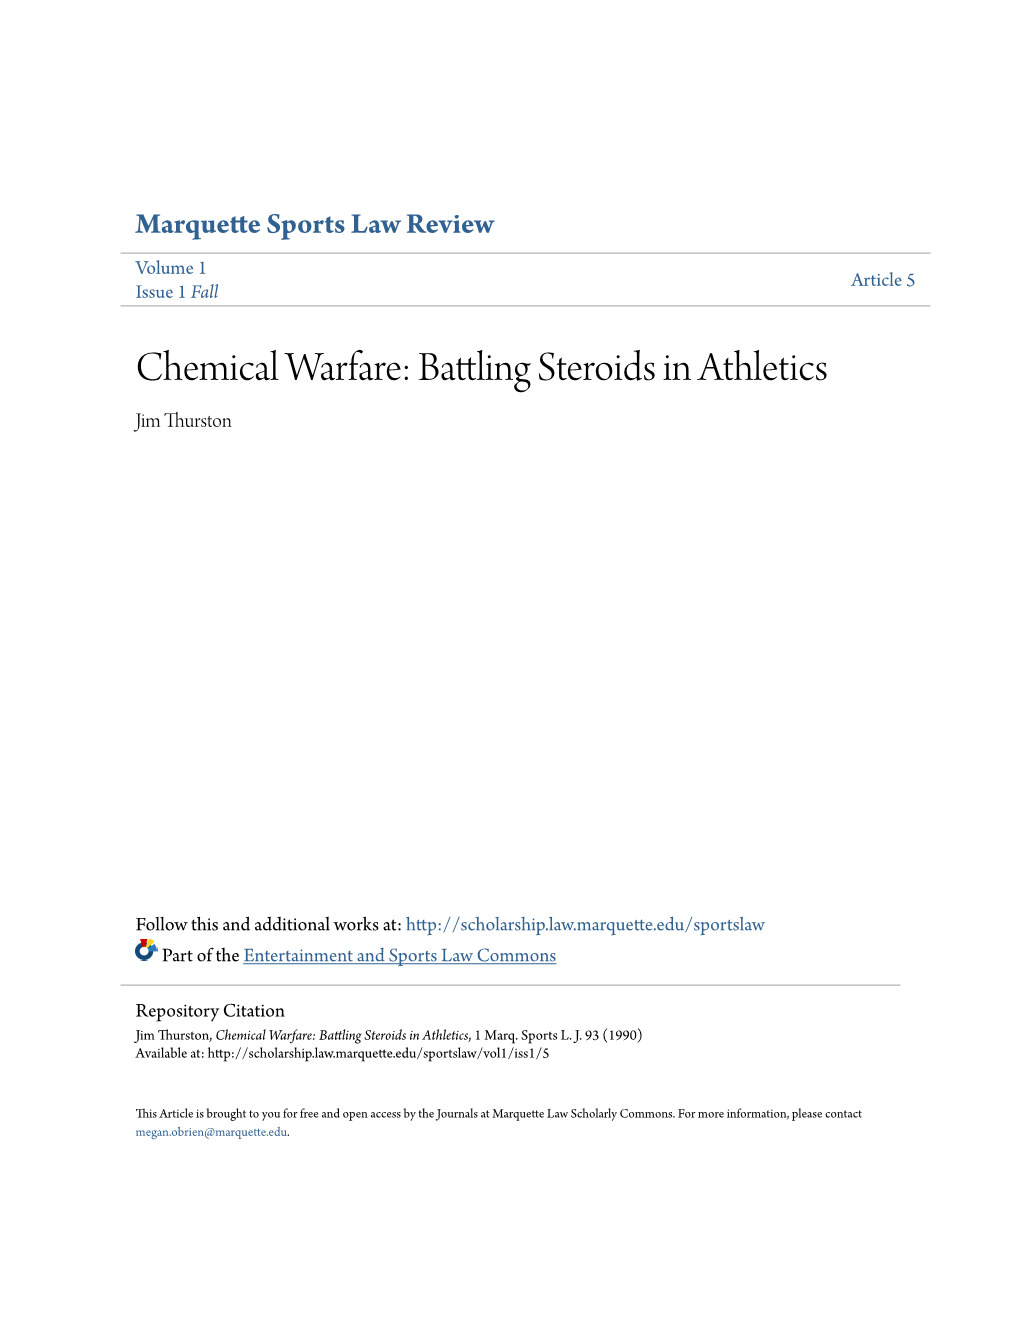 Chemical Warfare: Battling Steroids in Athletics Jim Thurston